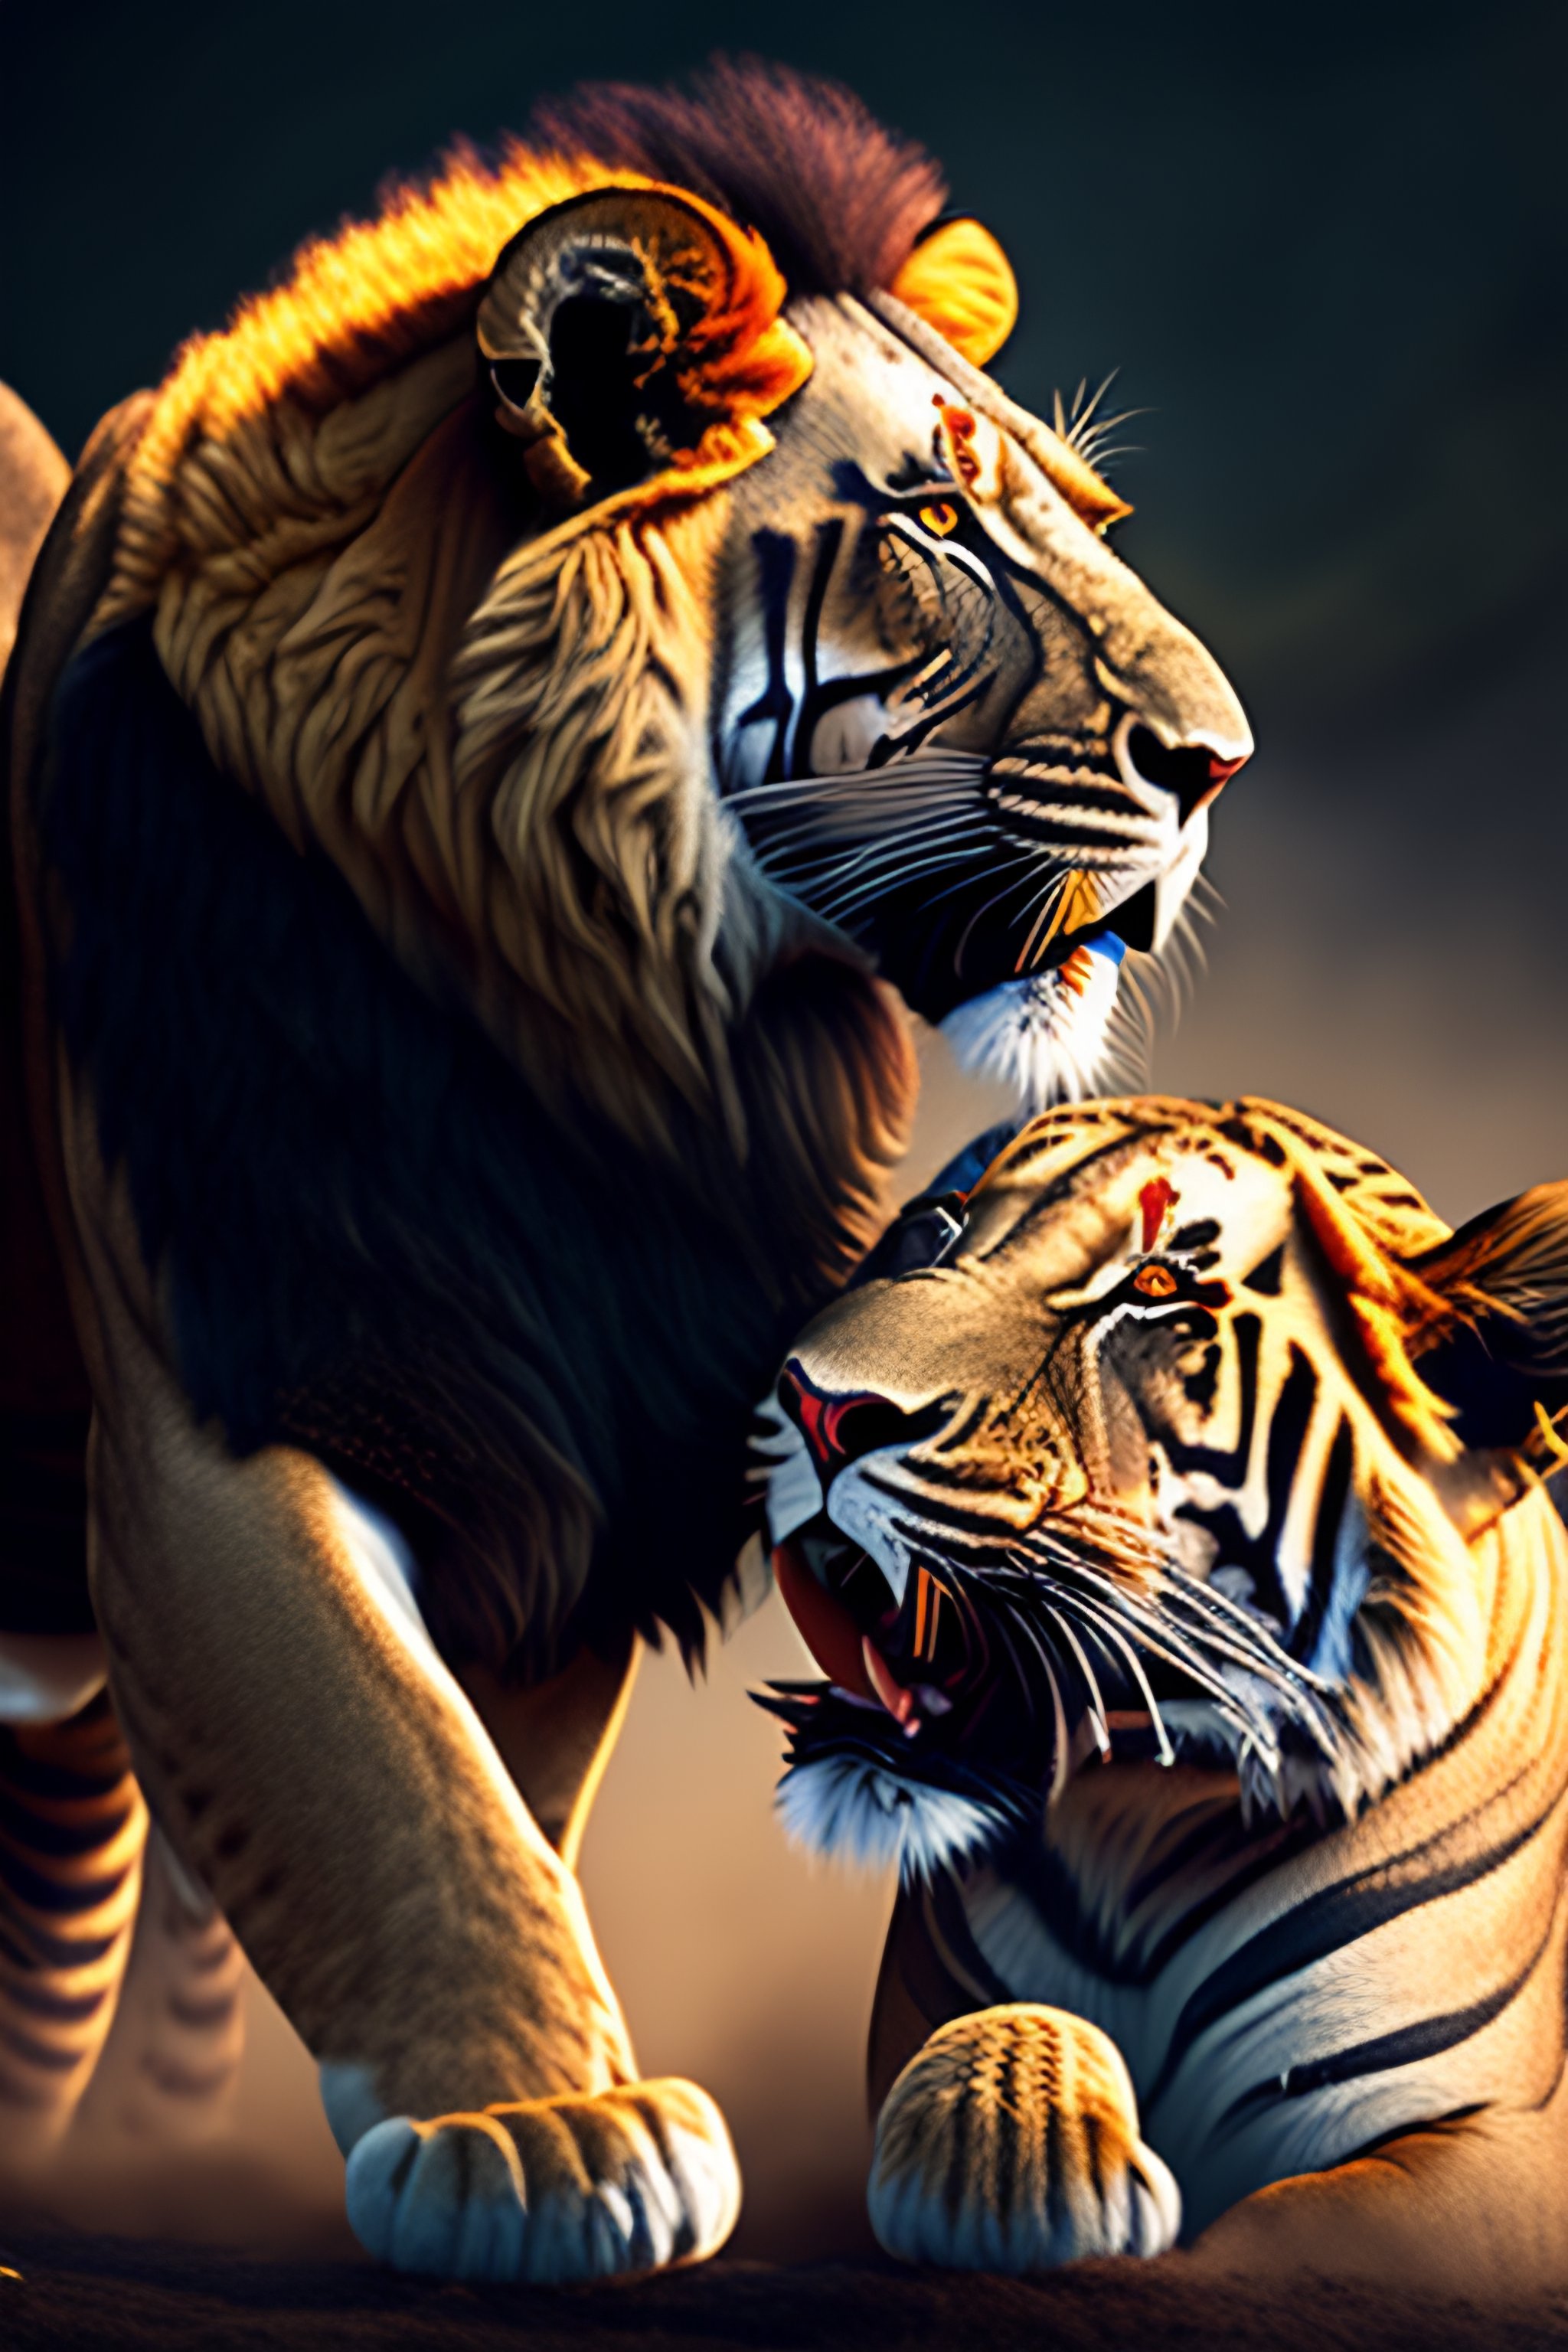 lion vs tiger fight